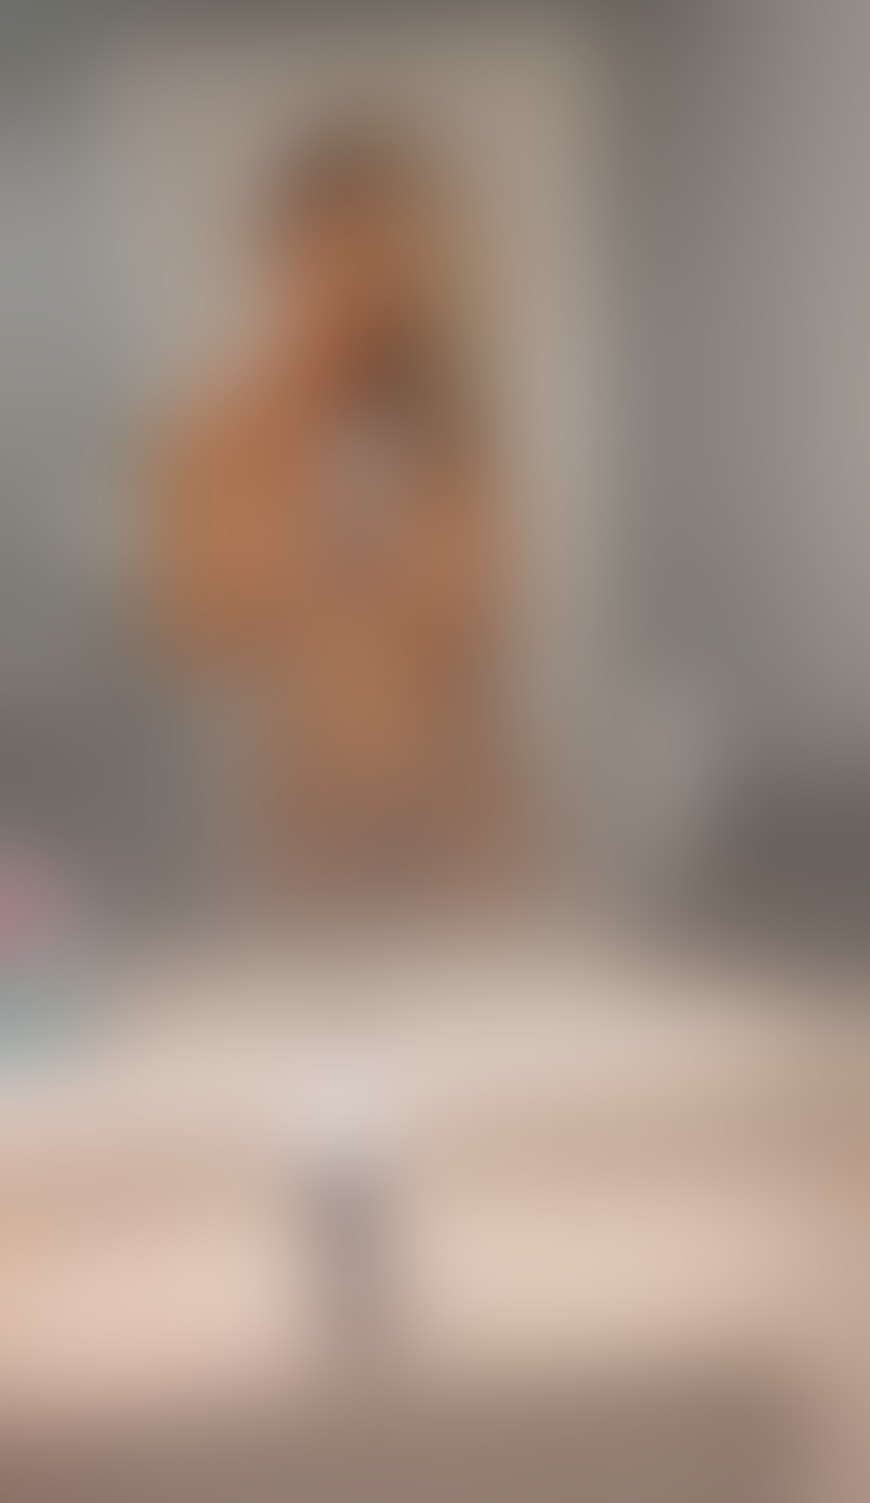 Bathroom nude for u - post hidden image